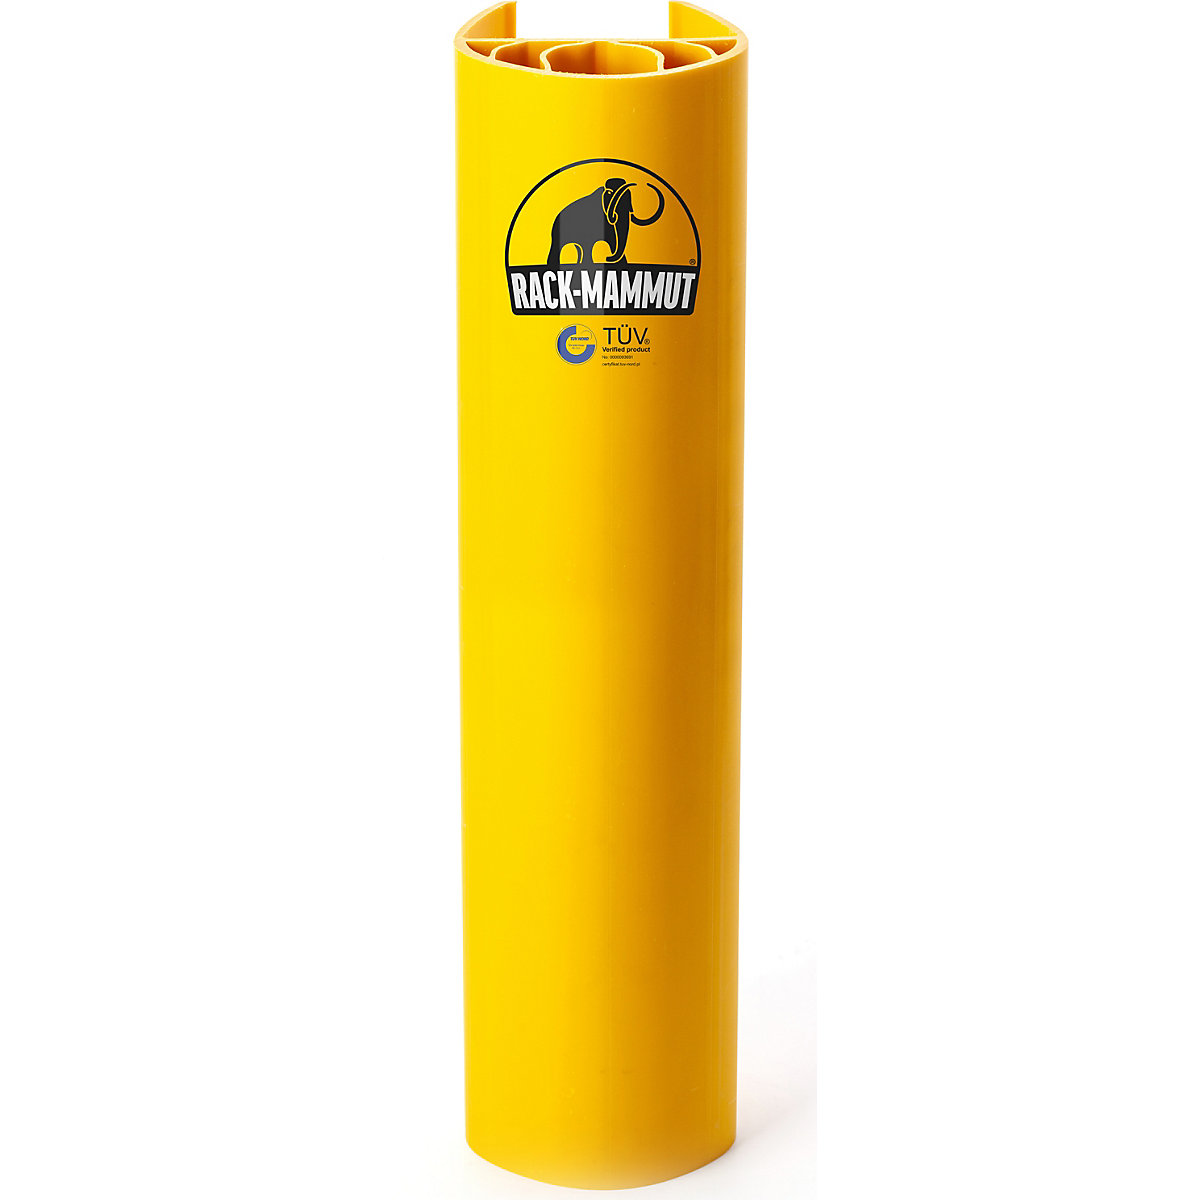 Proteção contra impactos na estante Rack-Mammut® - Ampere Rack Mammut